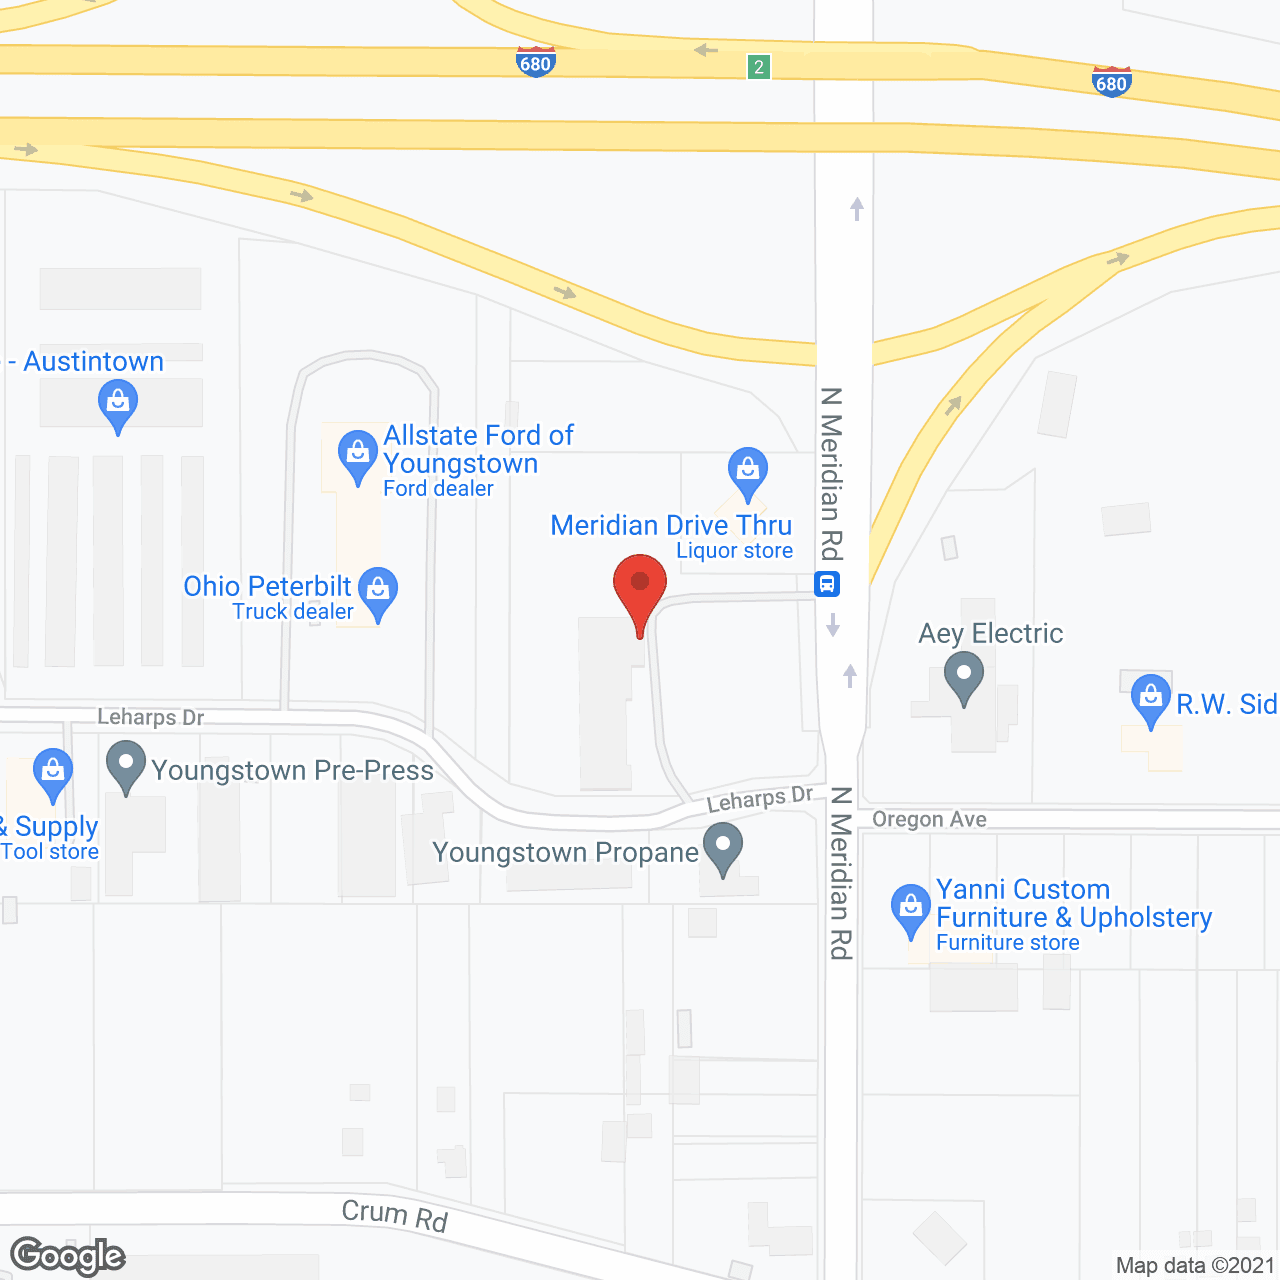 Austintown Studio Apartments in google map